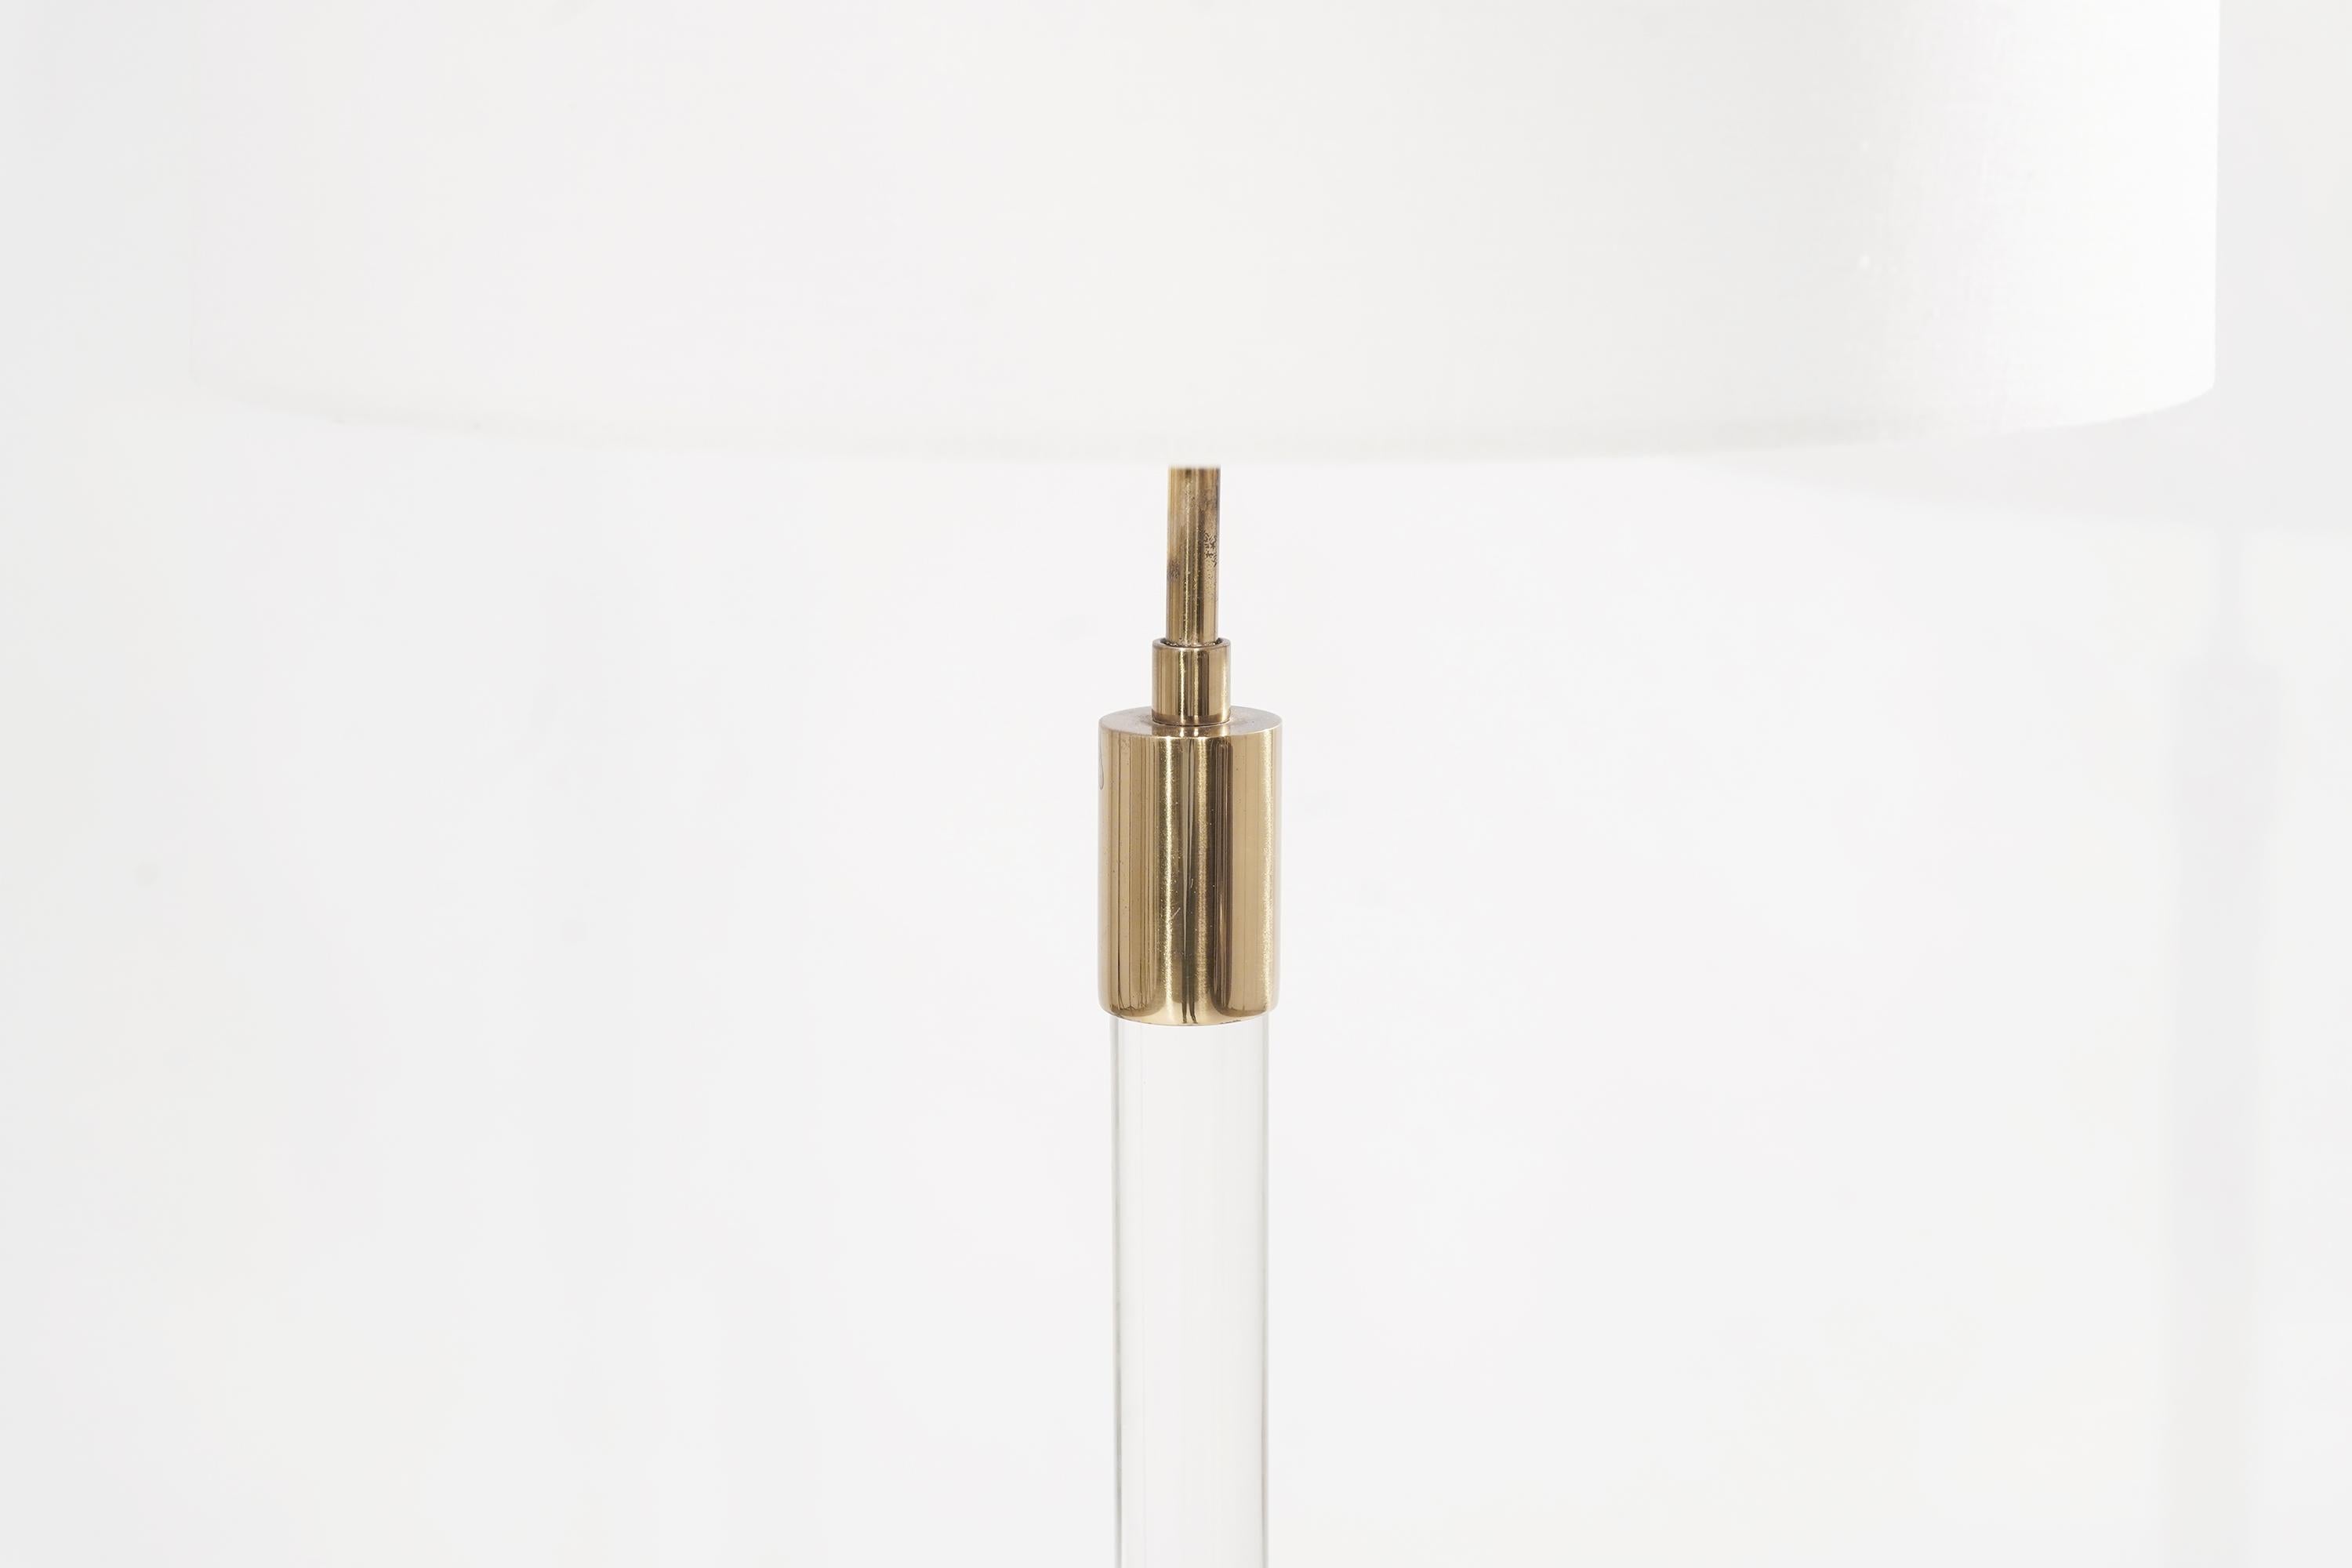 20th Century Glass Rod Floor Lamps by Hansen Lighting Co. New York, 1970s For Sale